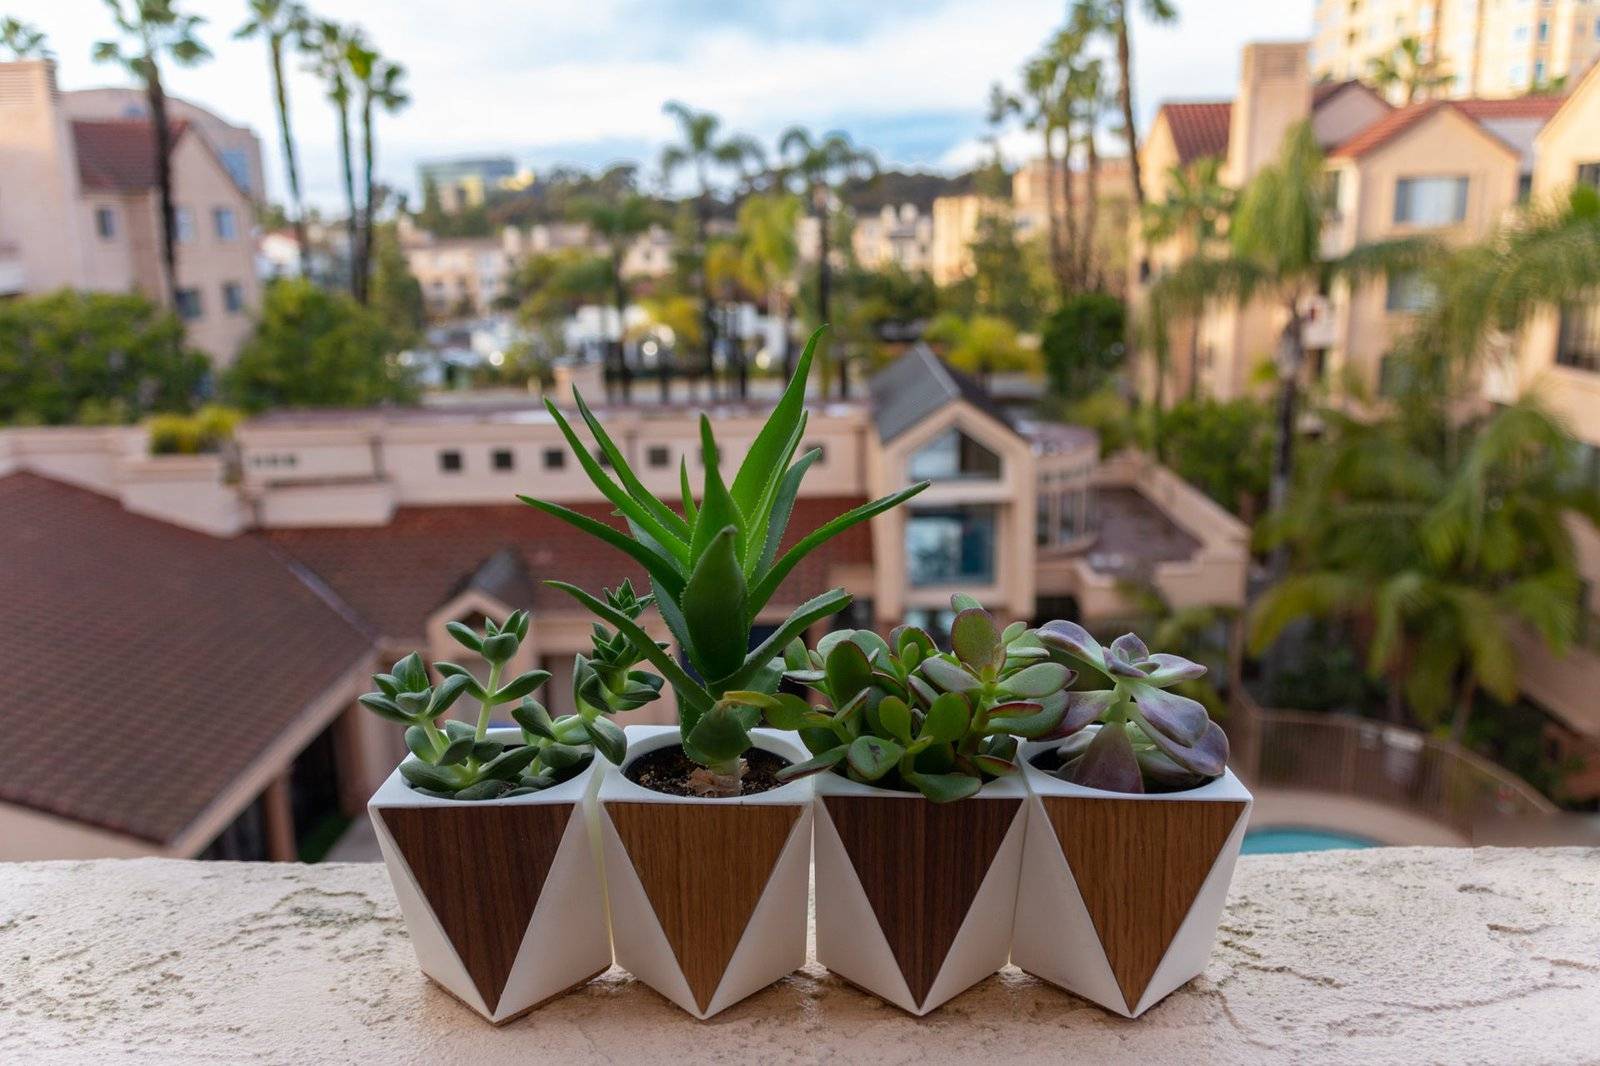 Succulent Planter - Handmade geometric modern chess set design gift by PLA Concept